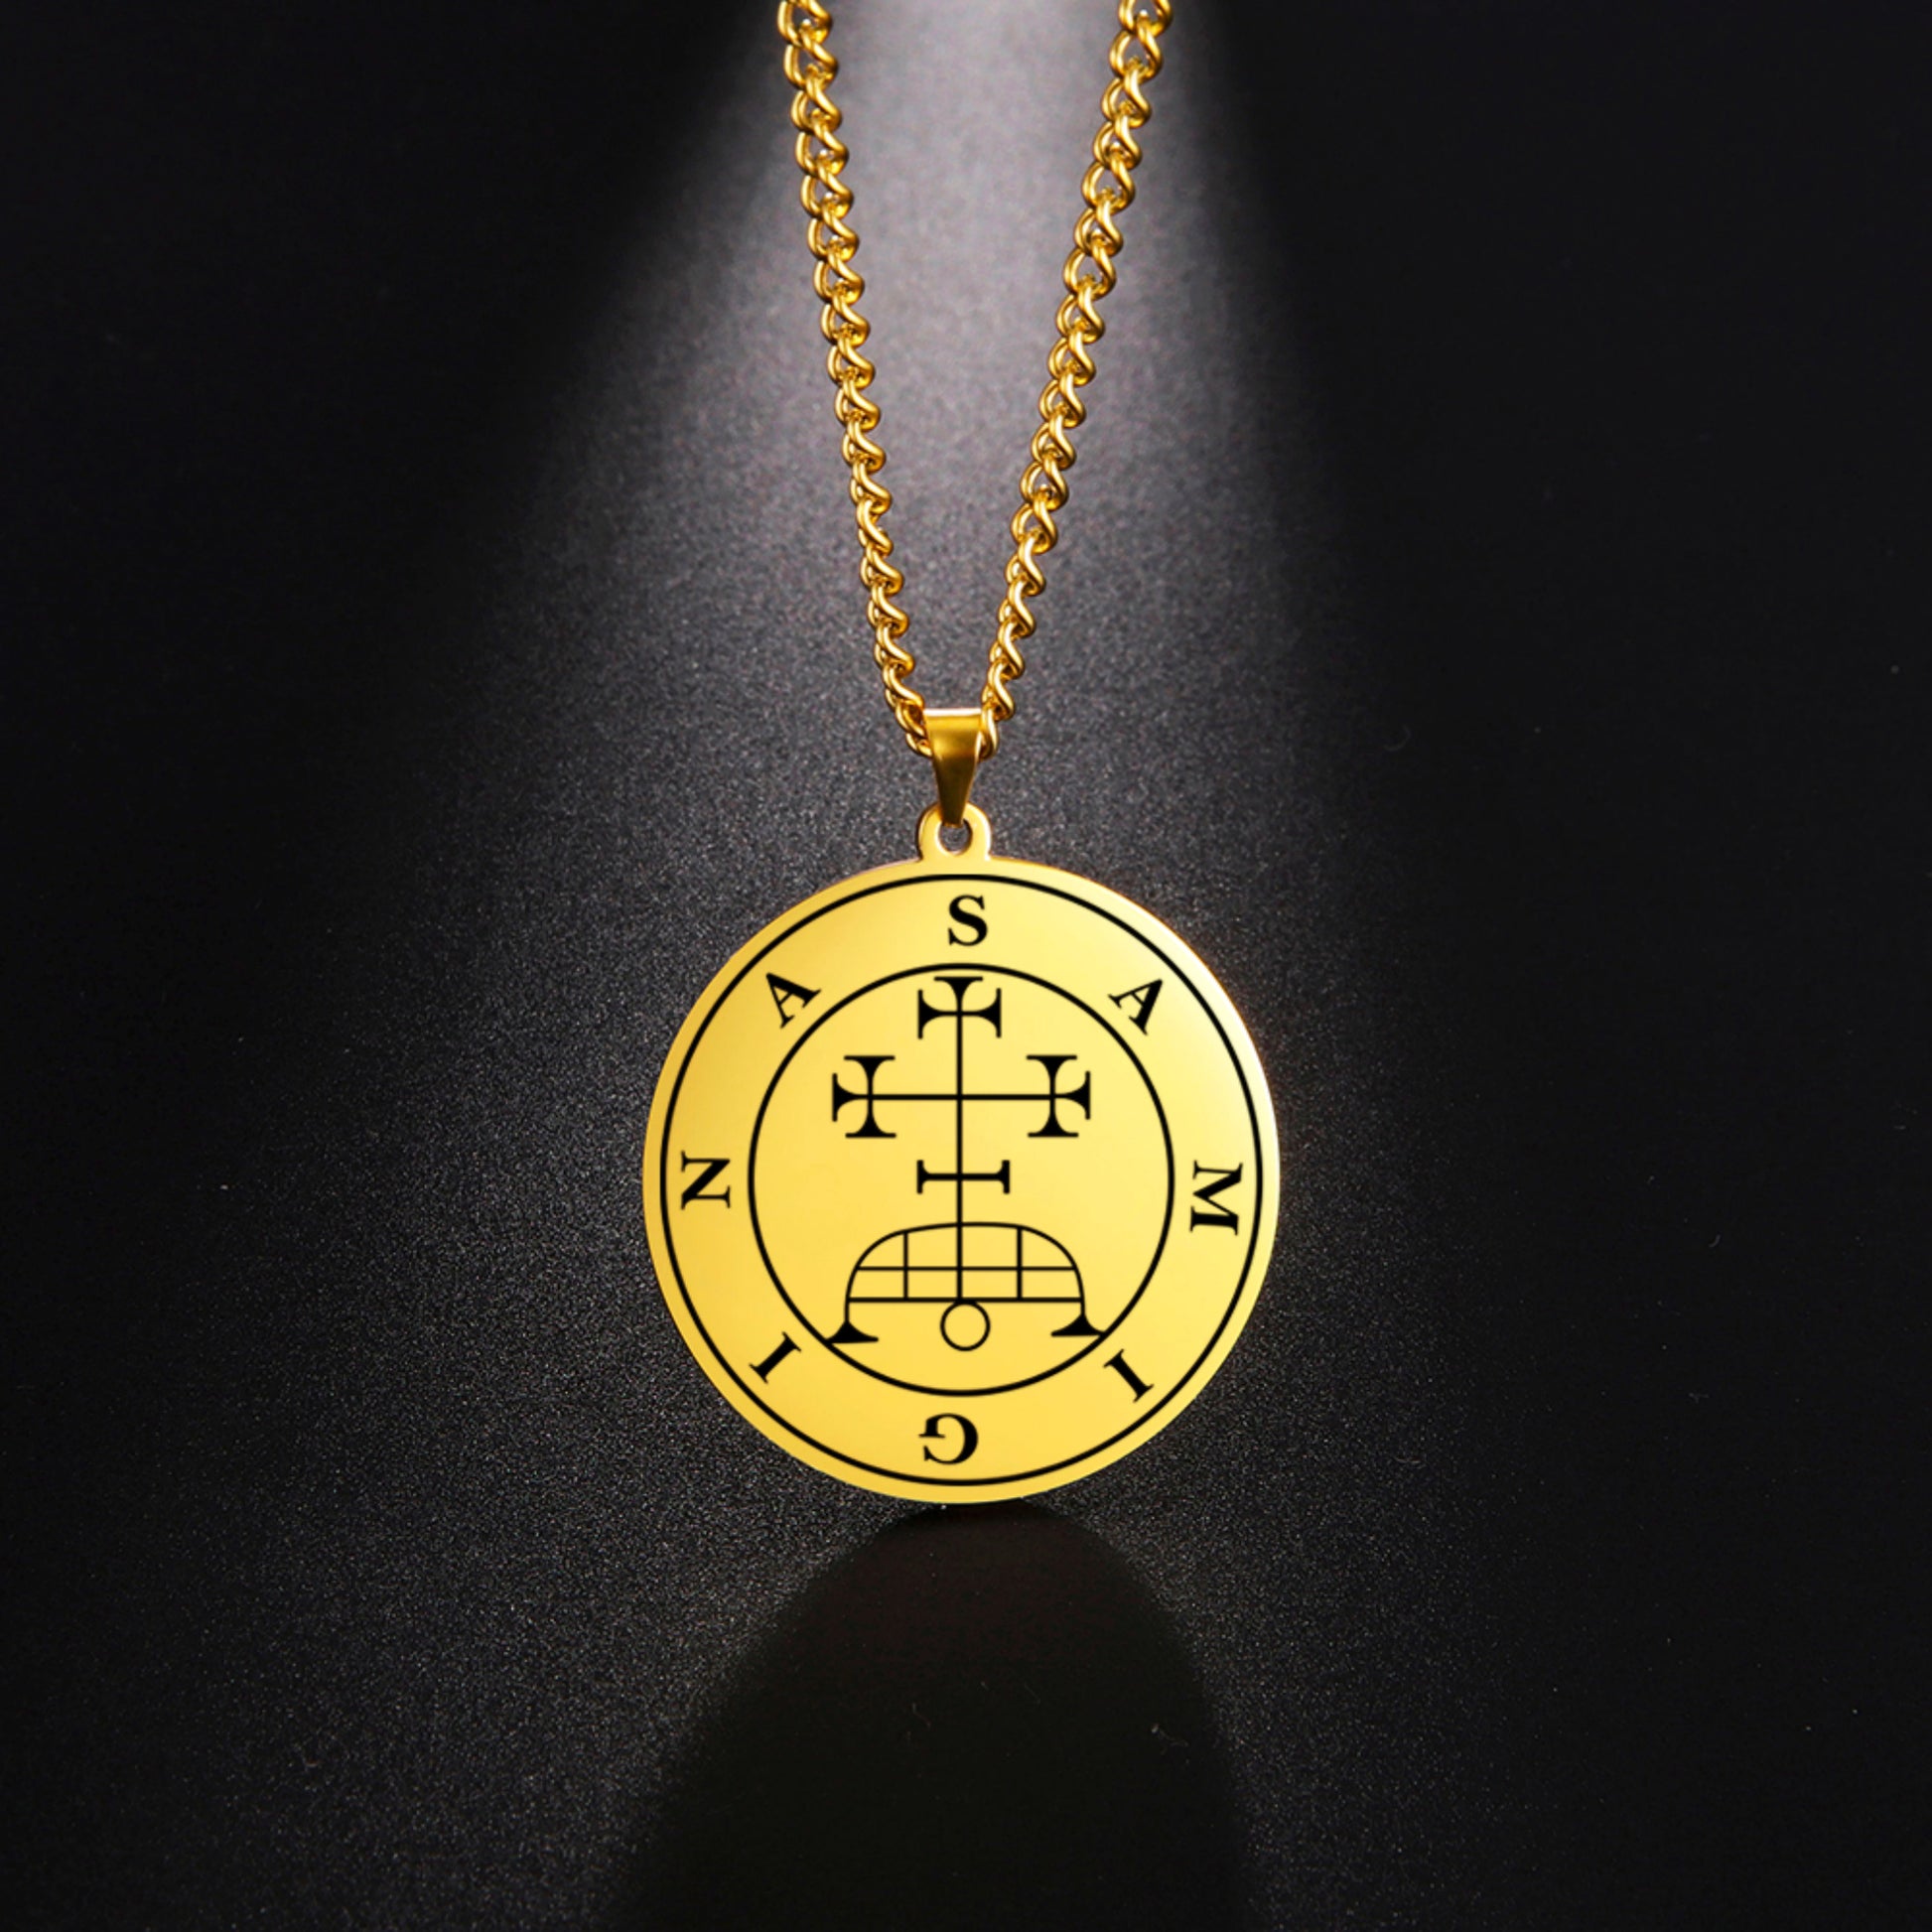 Gold Necklace Of Demon Sigil From The Lesser Key Of Solomon | Goetia Magick Pendants (Sigils 13-24) | Apollo Tarot Jewelry Shop